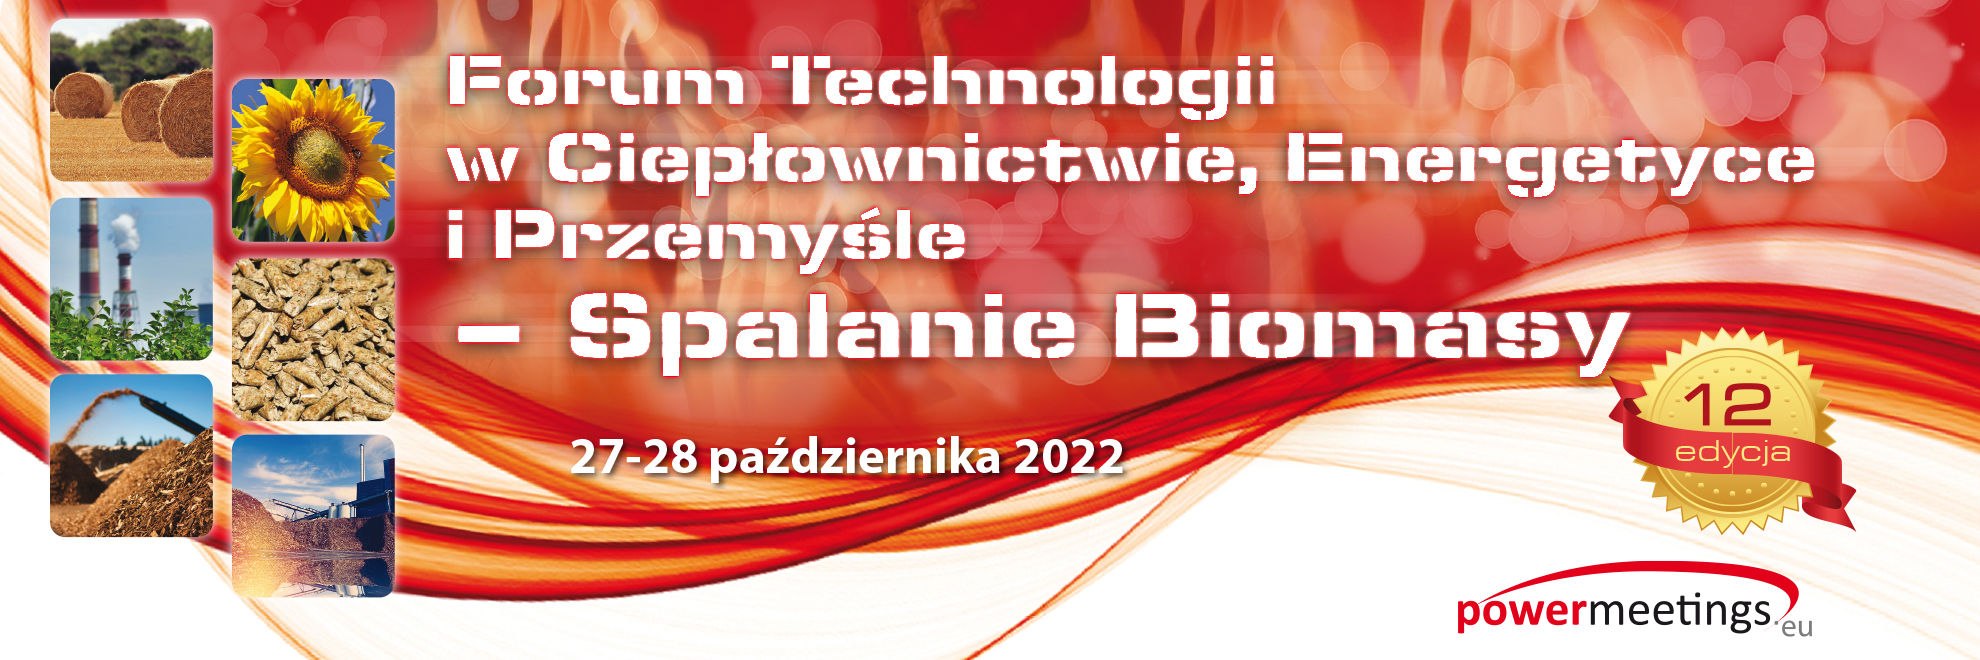 XII Forum Spalania Biomasy 2022